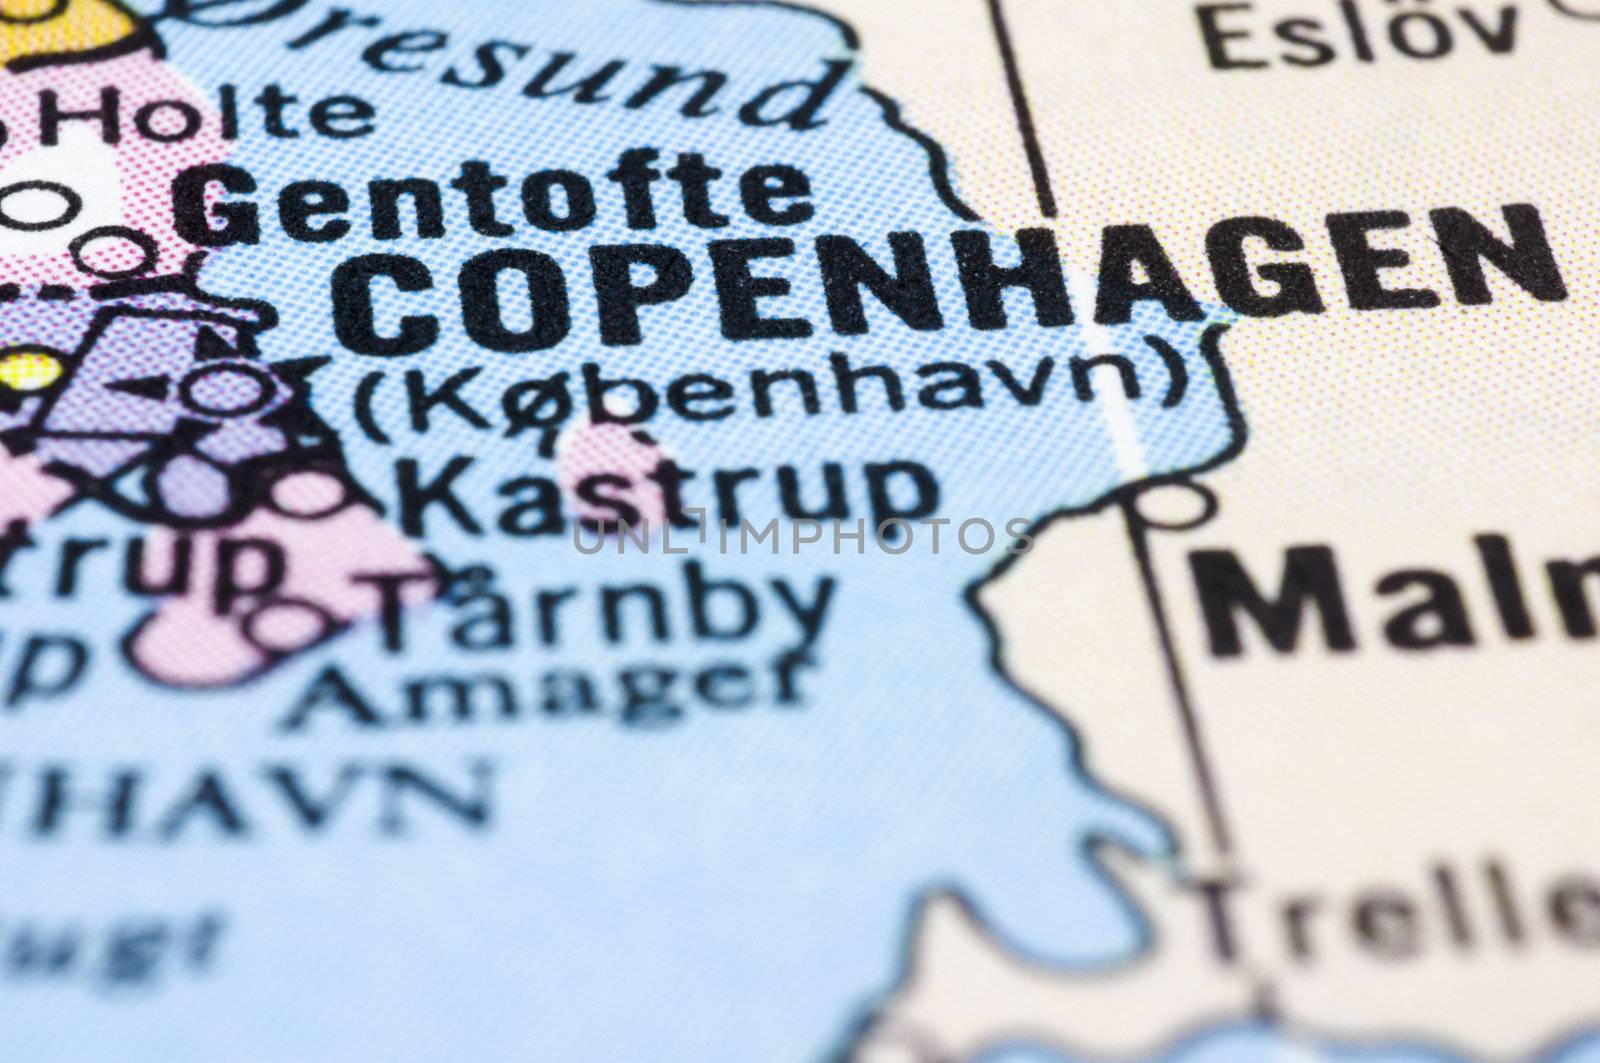 Close up of Copenhagen on map, capital city of denmark.